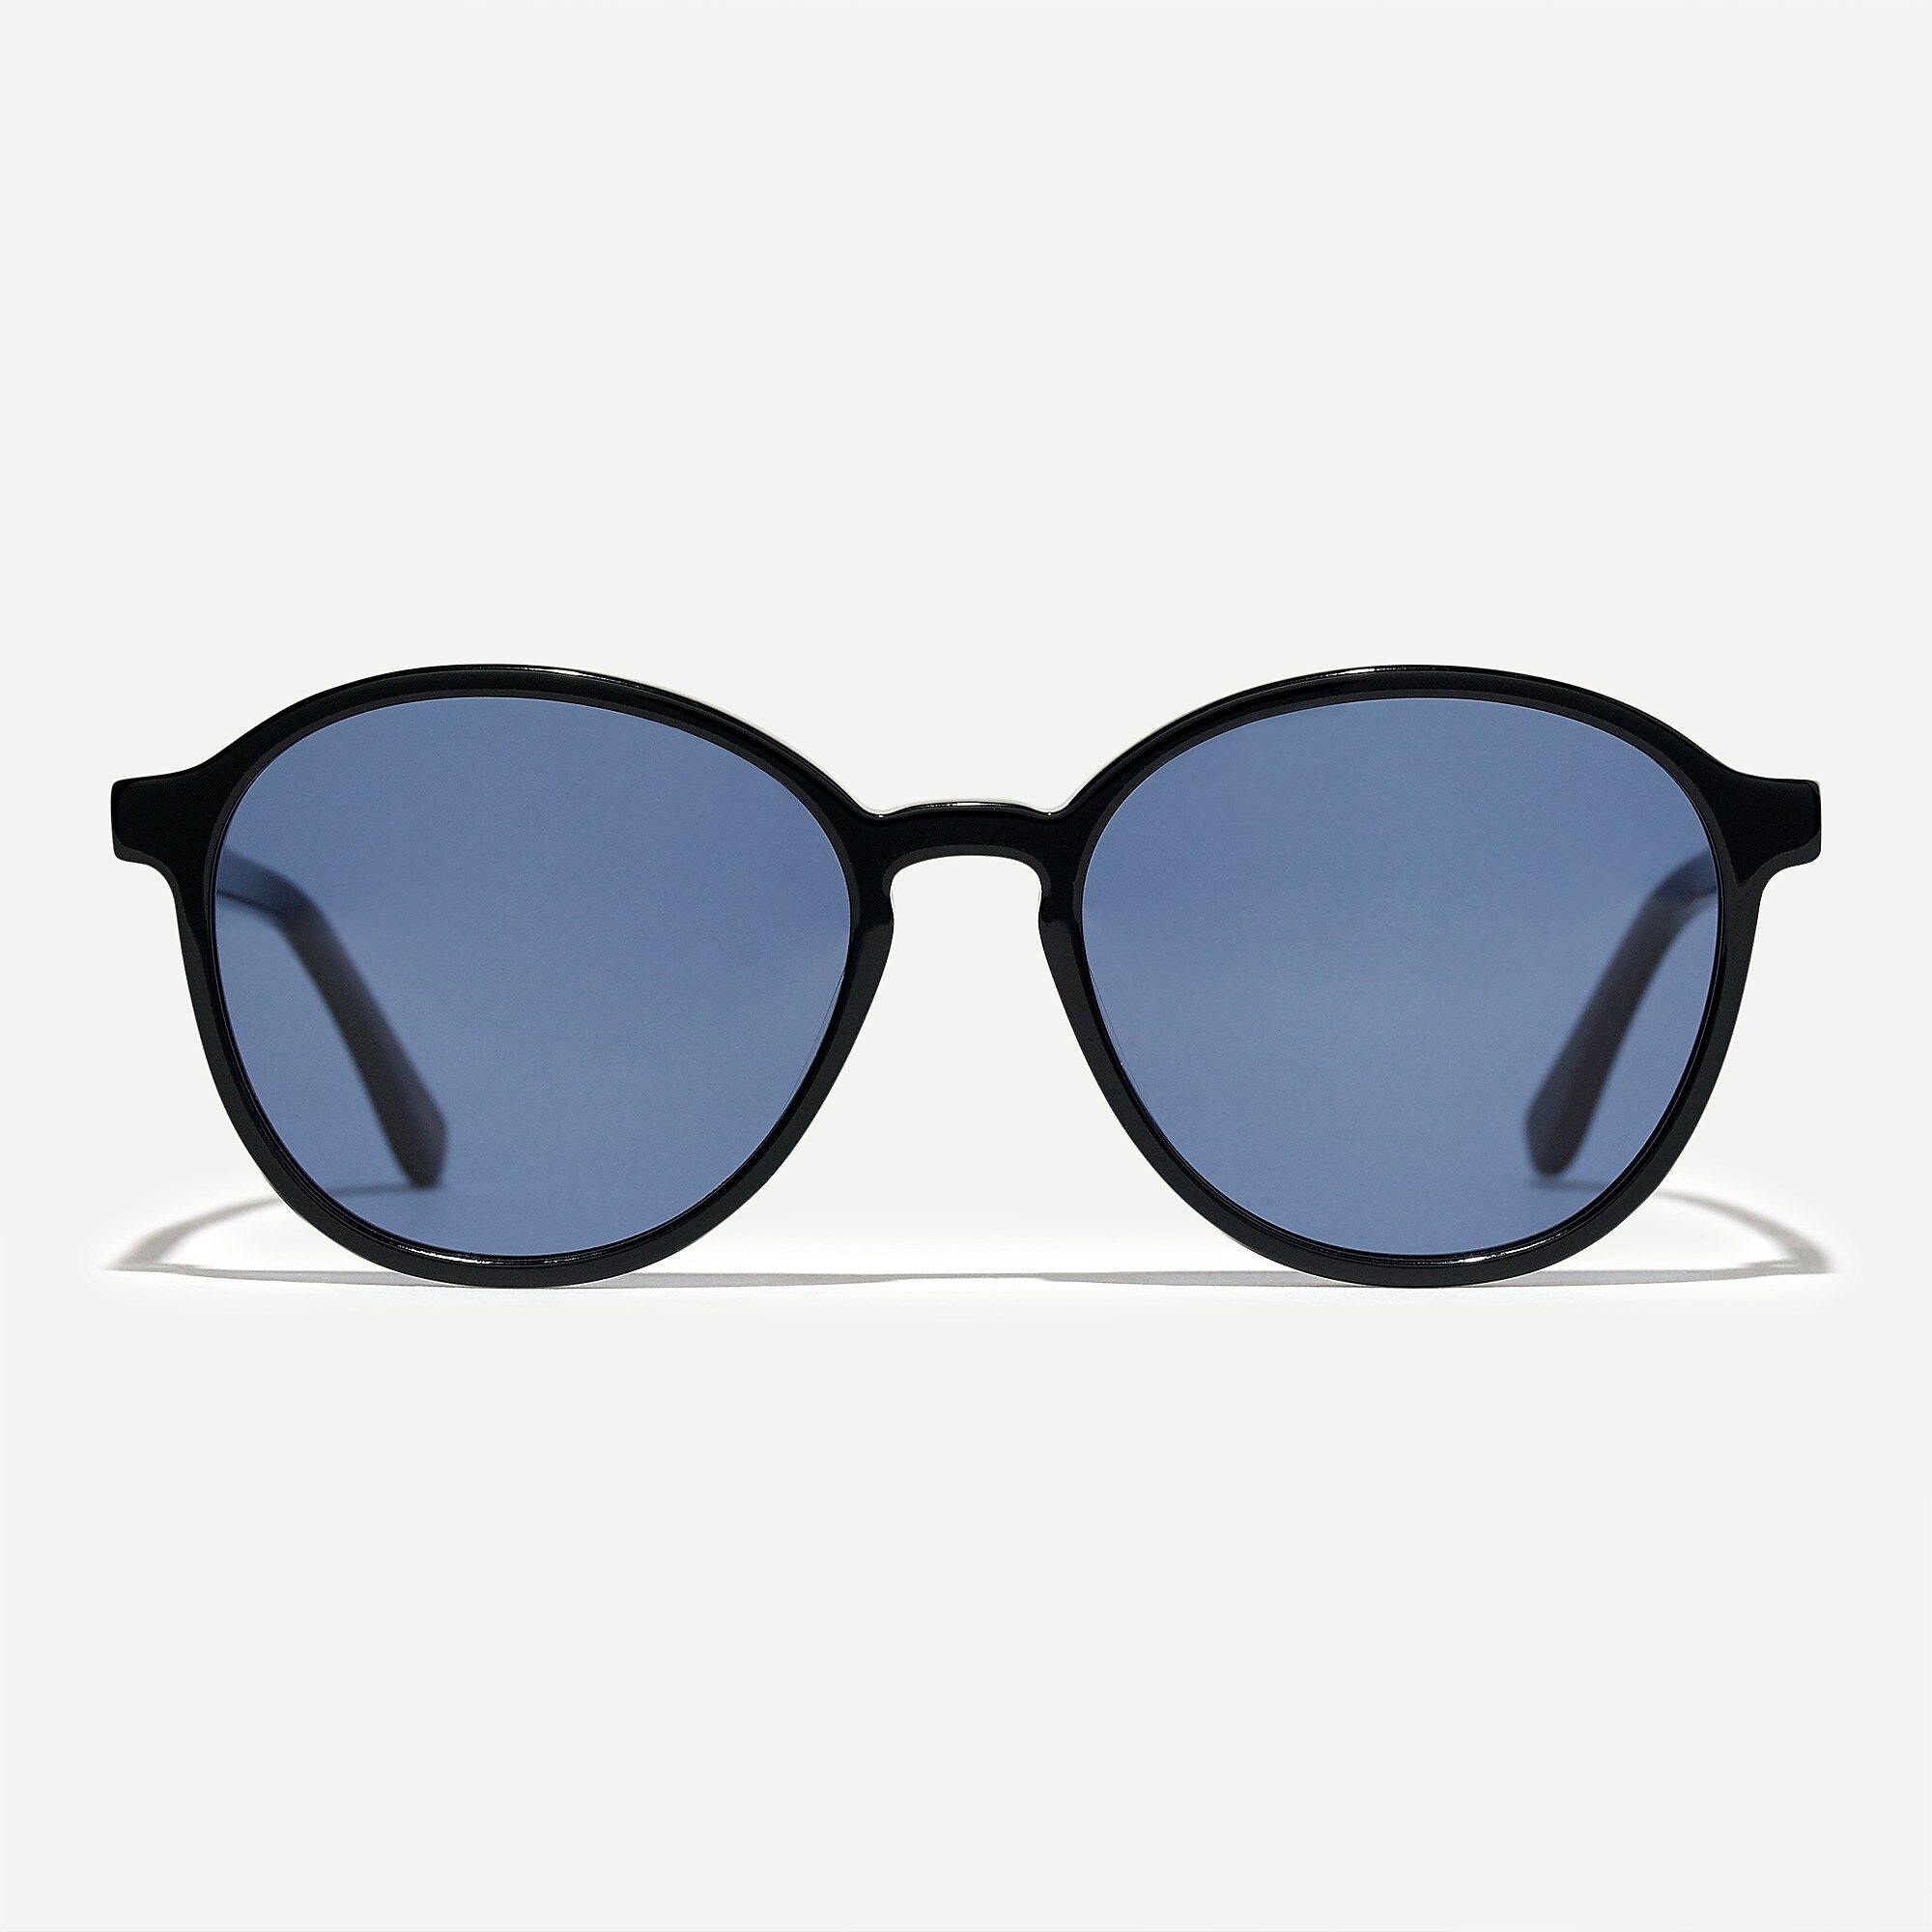 Retro ombré round sunglasses | J.Crew US